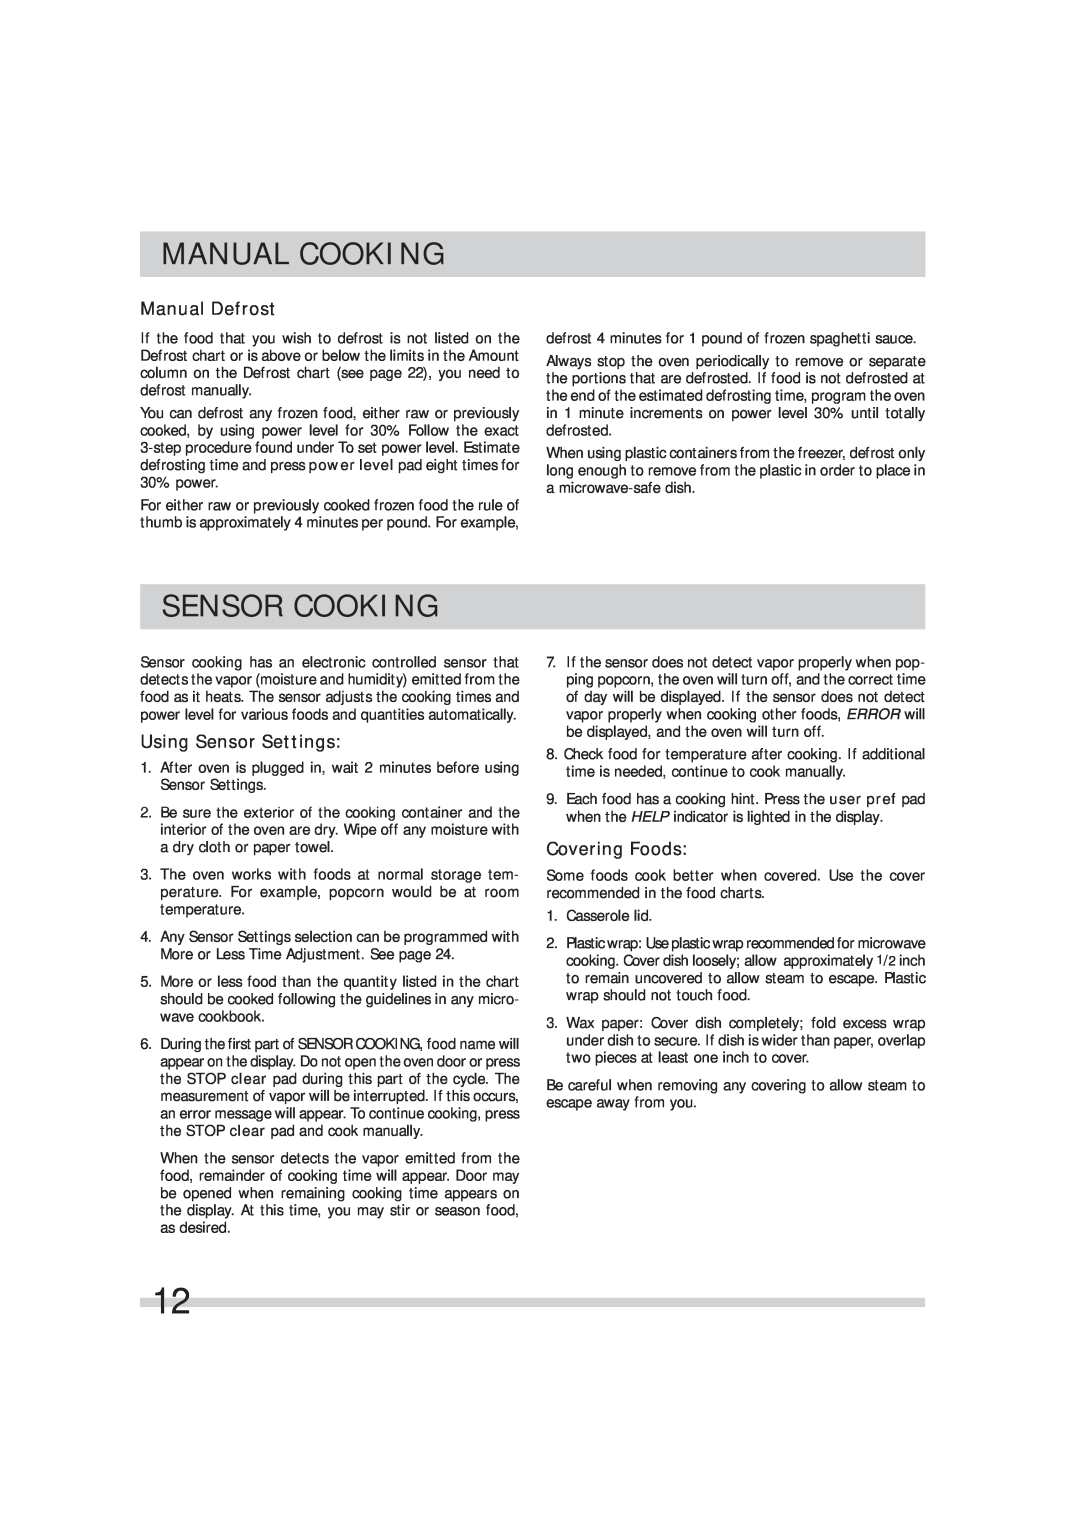 Frigidaire 316495054 manual Sensor Cooking, Manual Defrost, Using Sensor Settings, Covering Foods, Manual Cooking 